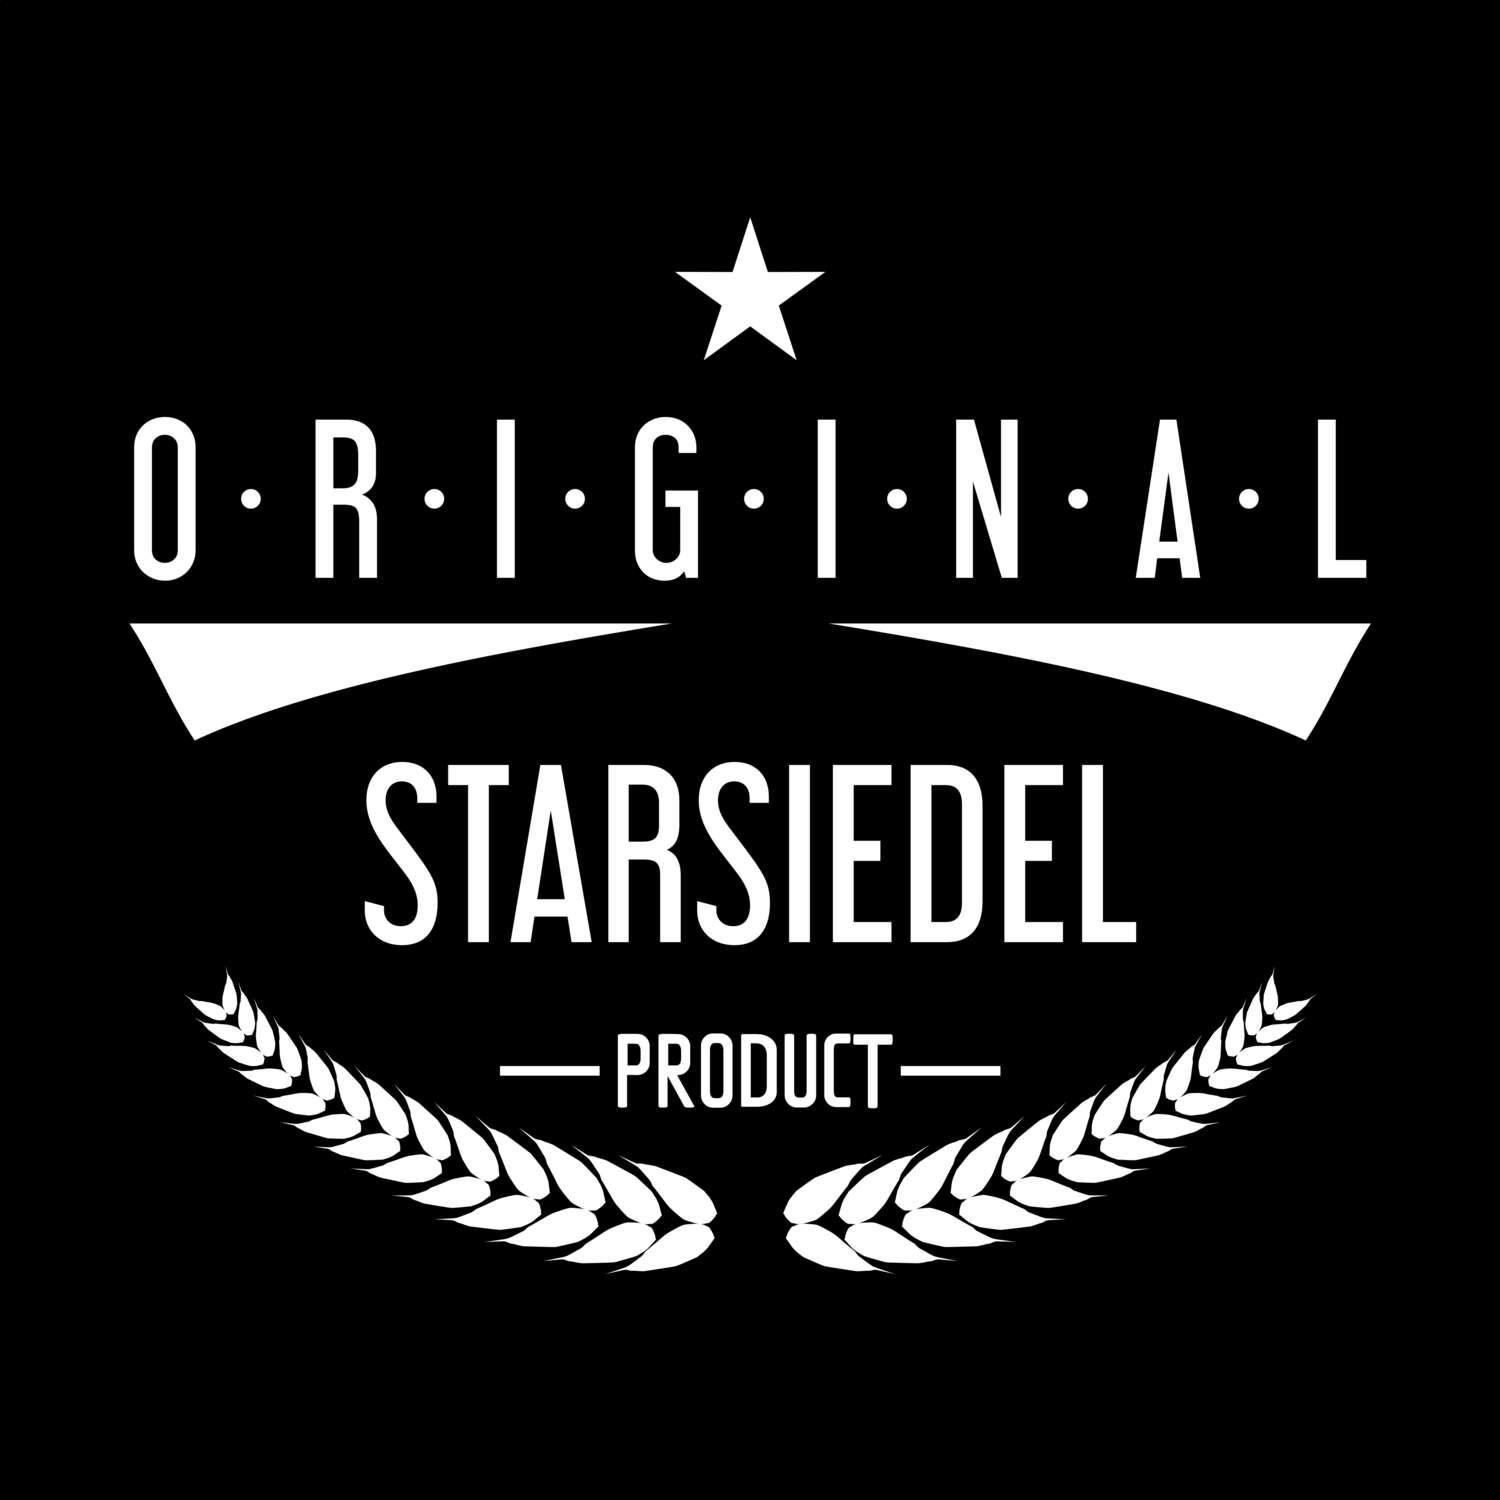 Starsiedel T-Shirt »Original Product«